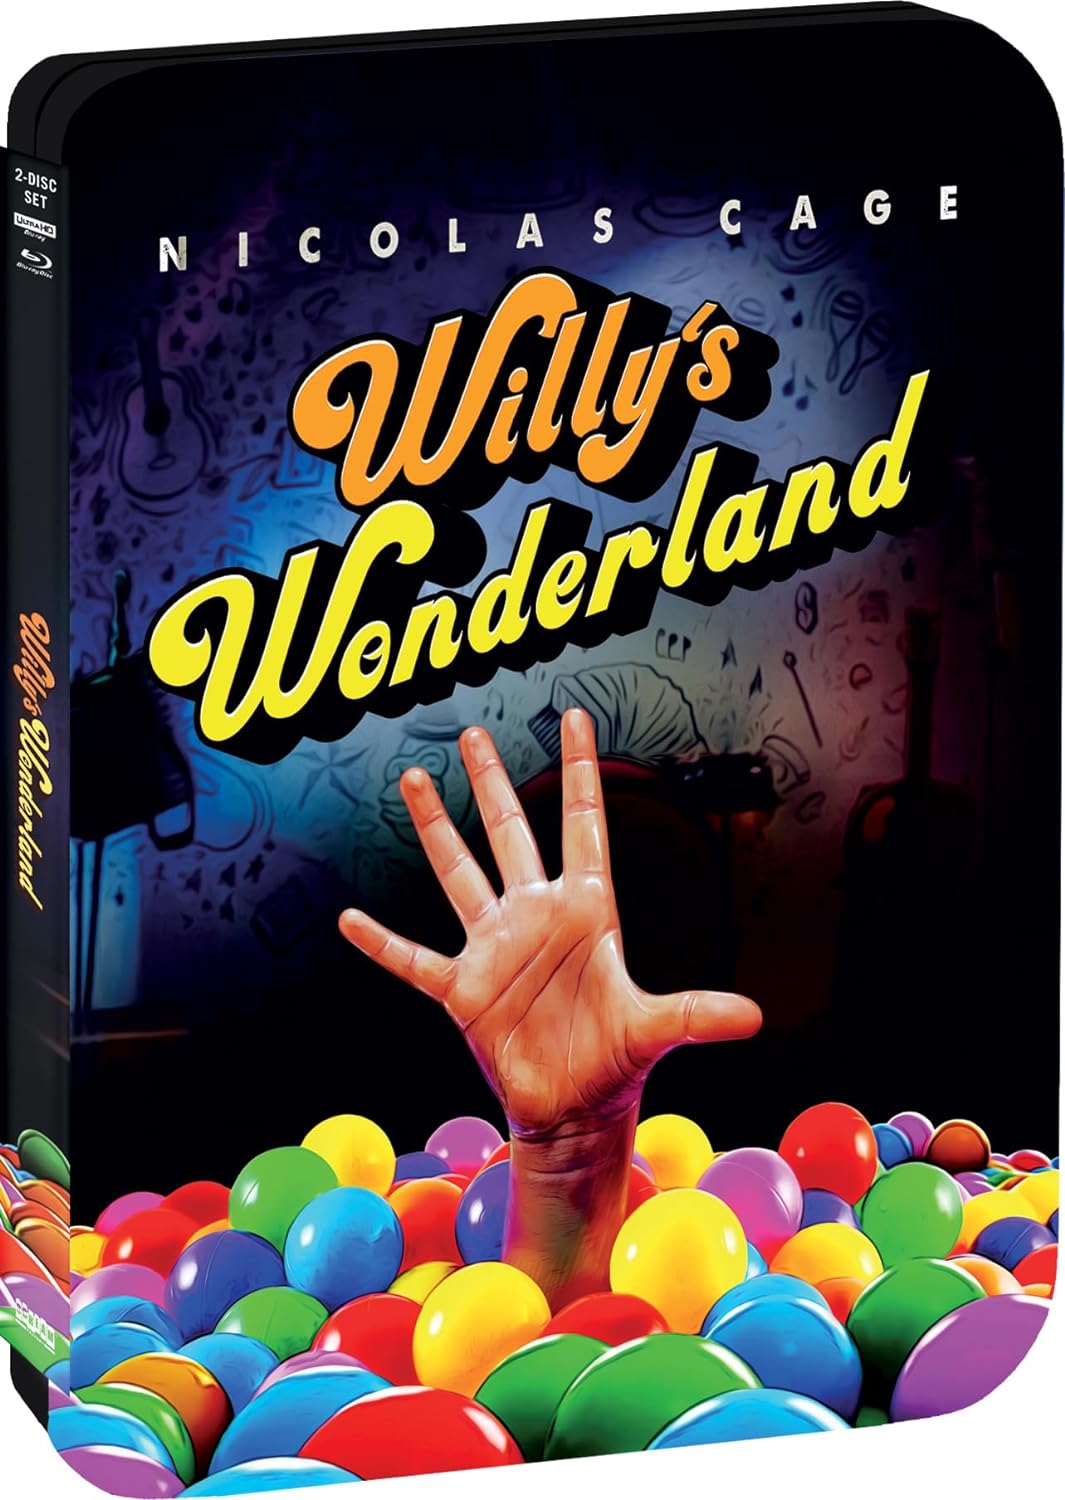 Willy's Wonderland Limited Edition Steelbook 4K Ultra HD + Blu-ray (Scream Factory)